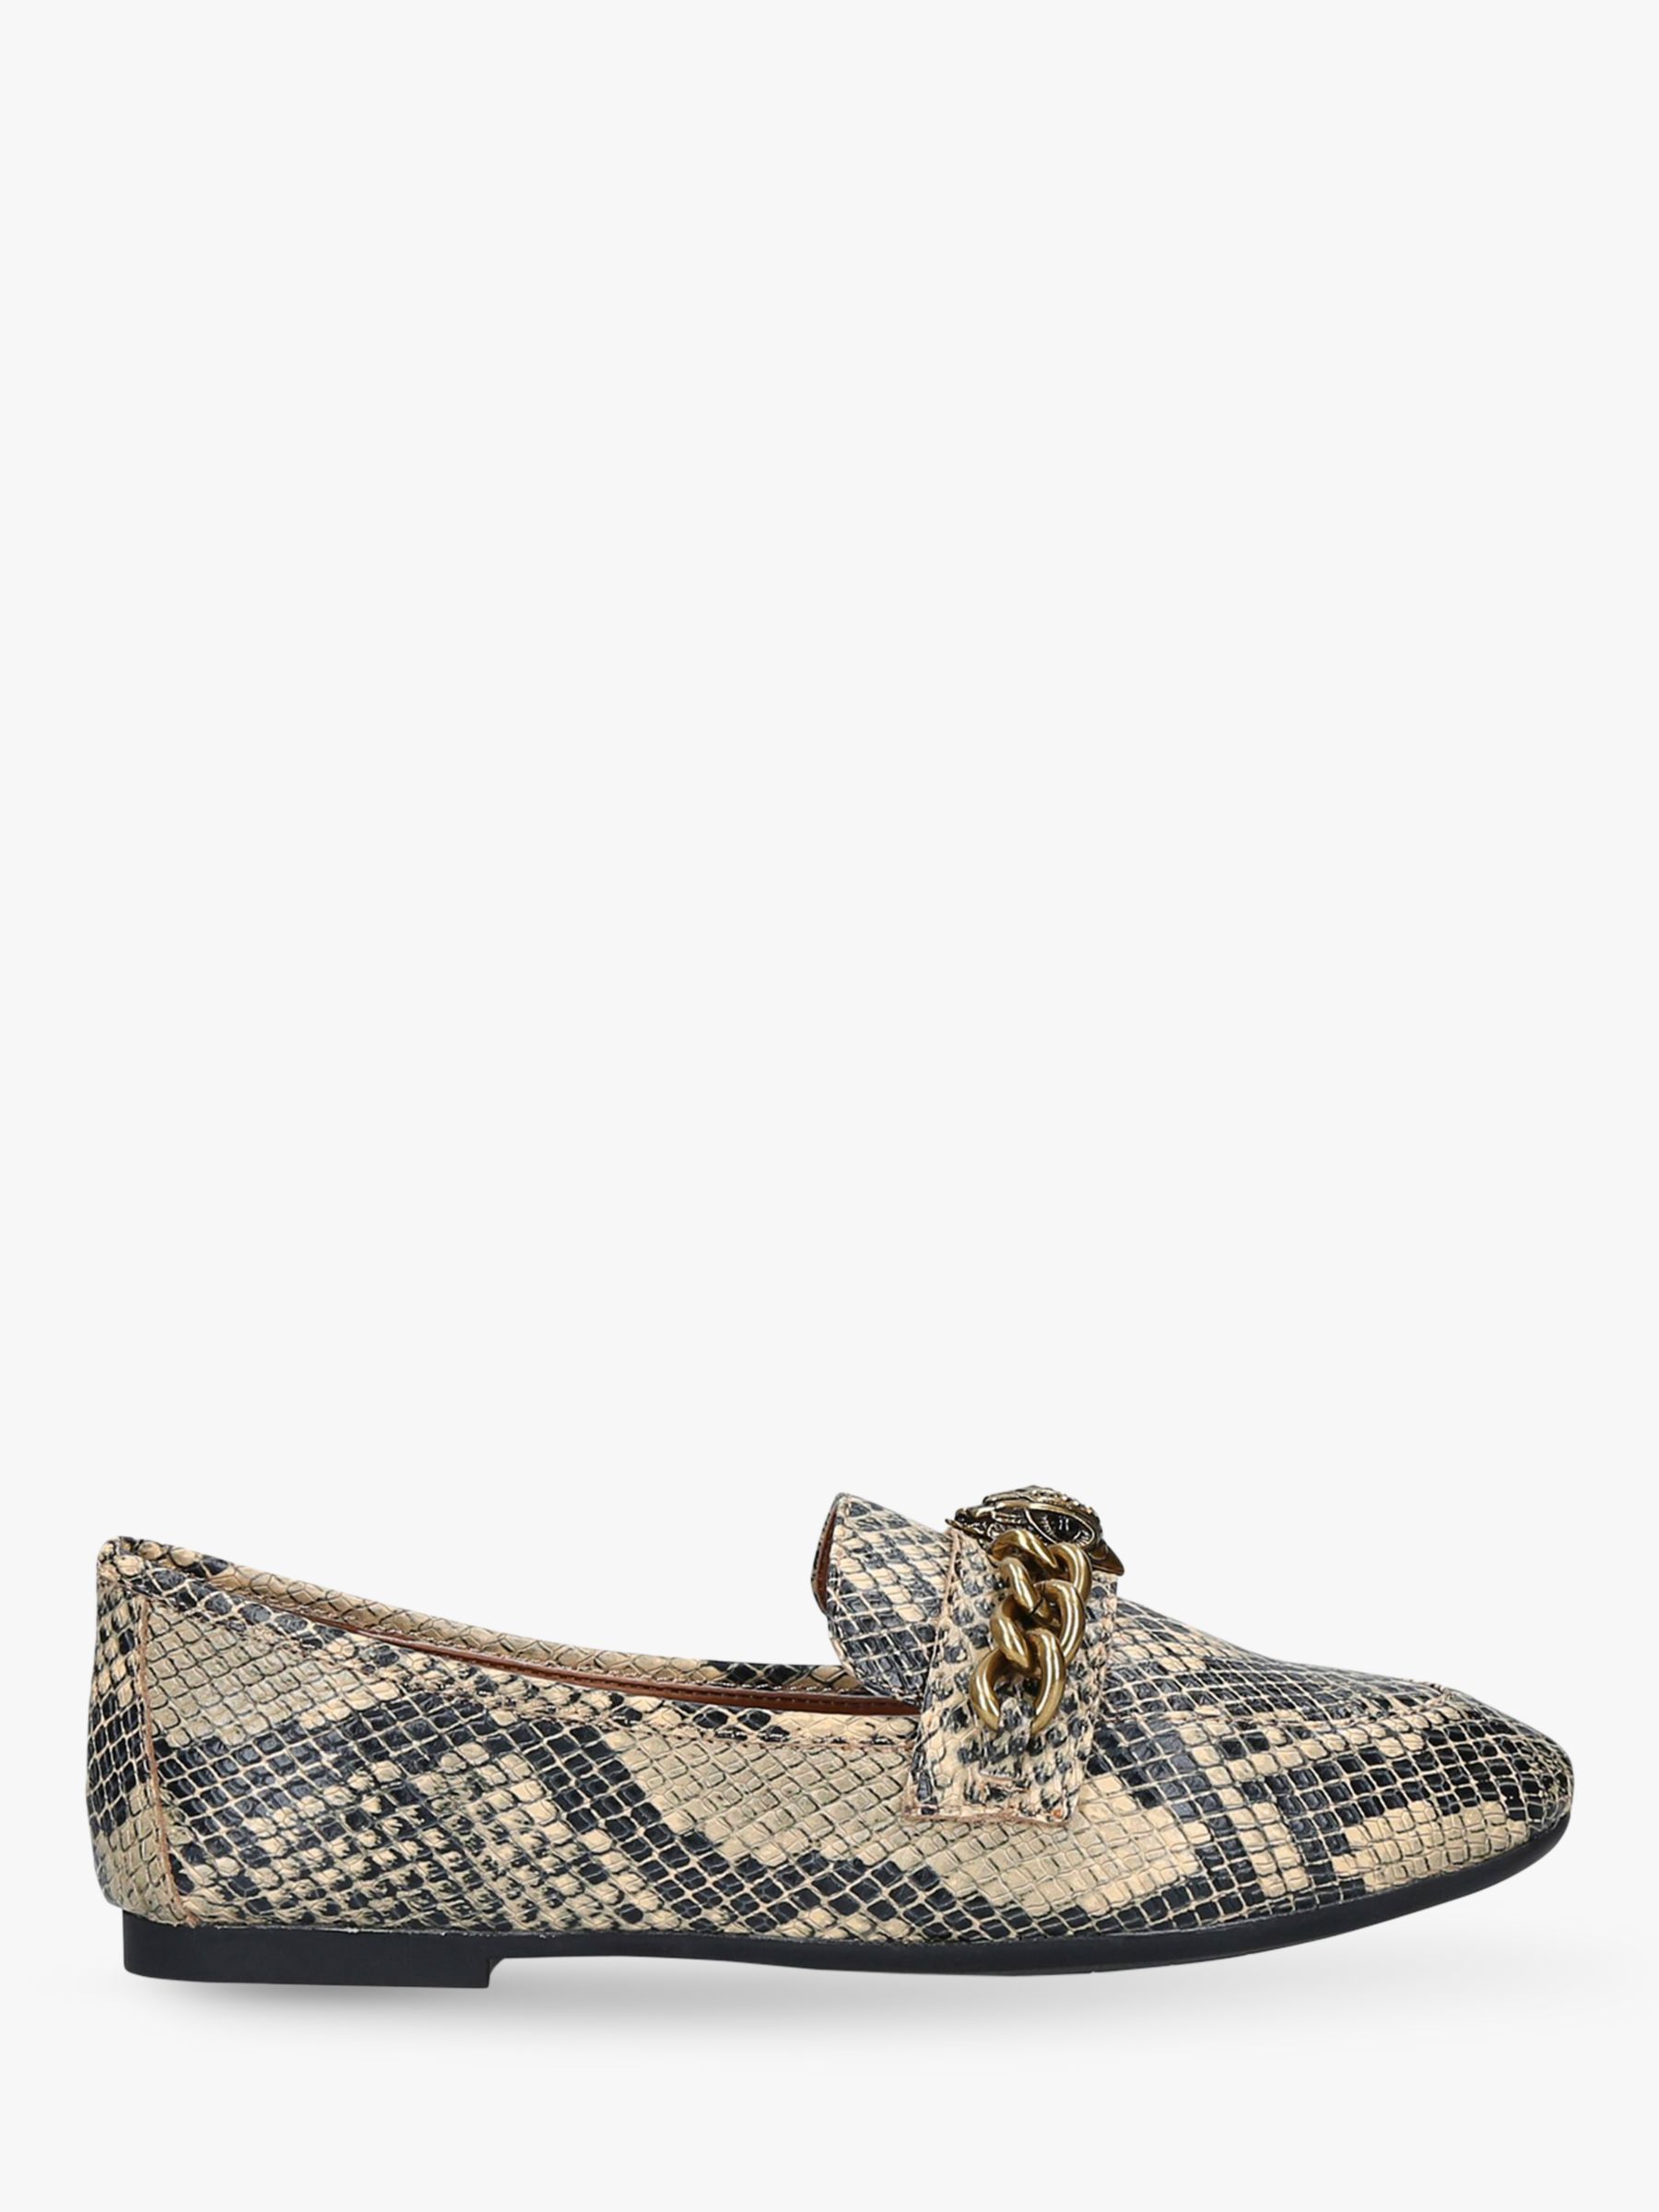 Kurt Geiger London Chelsea Snake Leather Loafers, Black/Multi